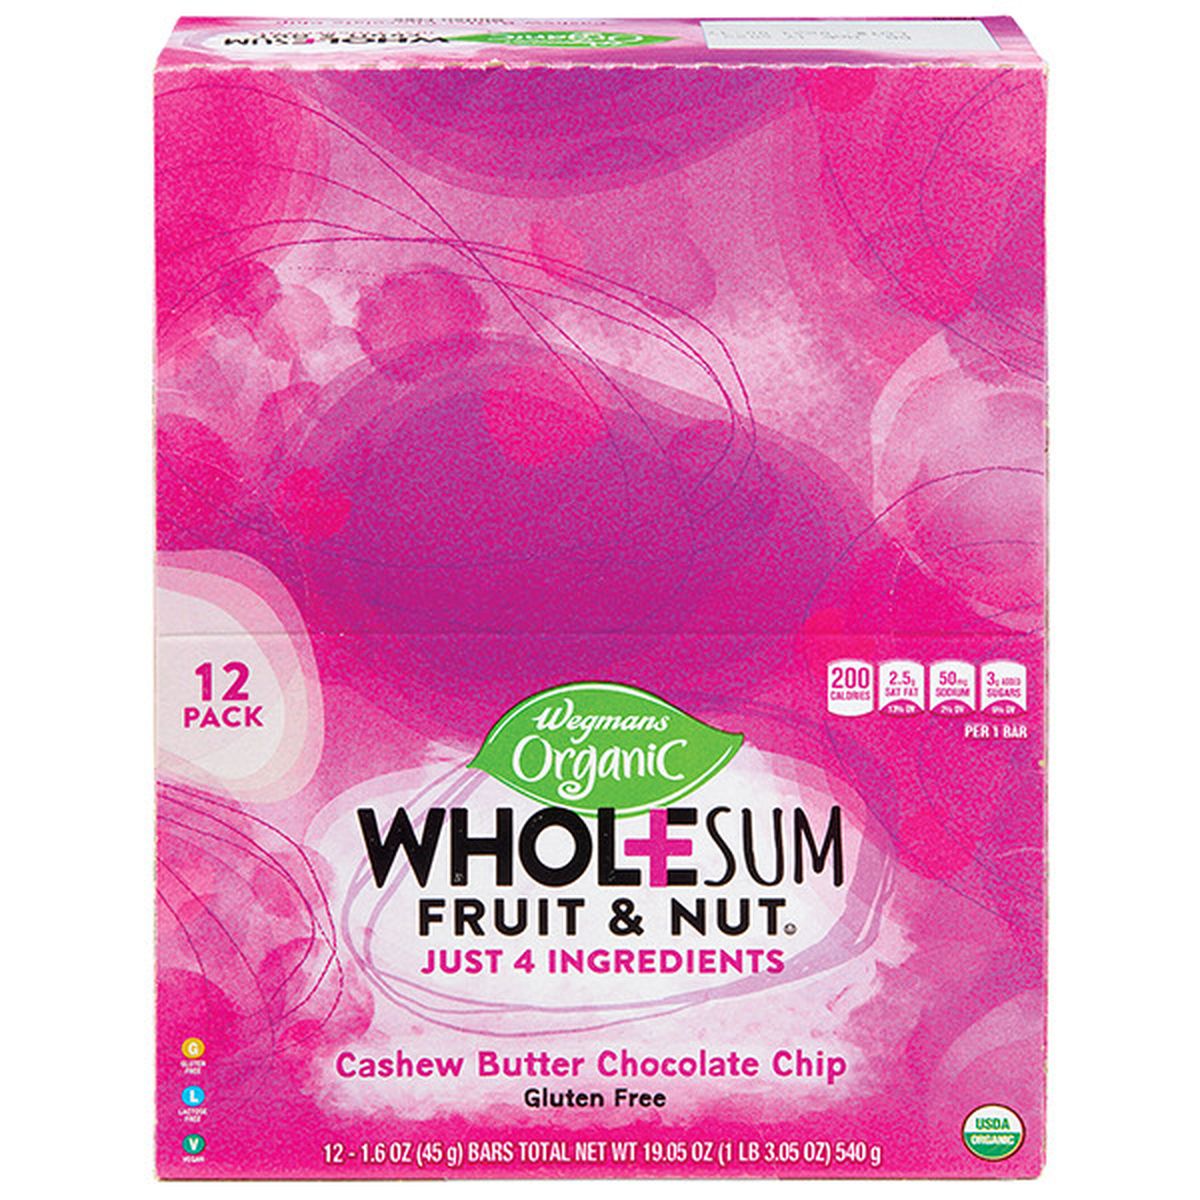 Calories in Wegmans Organic Cashew Butter Chocolate Chip Wholesum Fruit & Nut Bar 12ct box